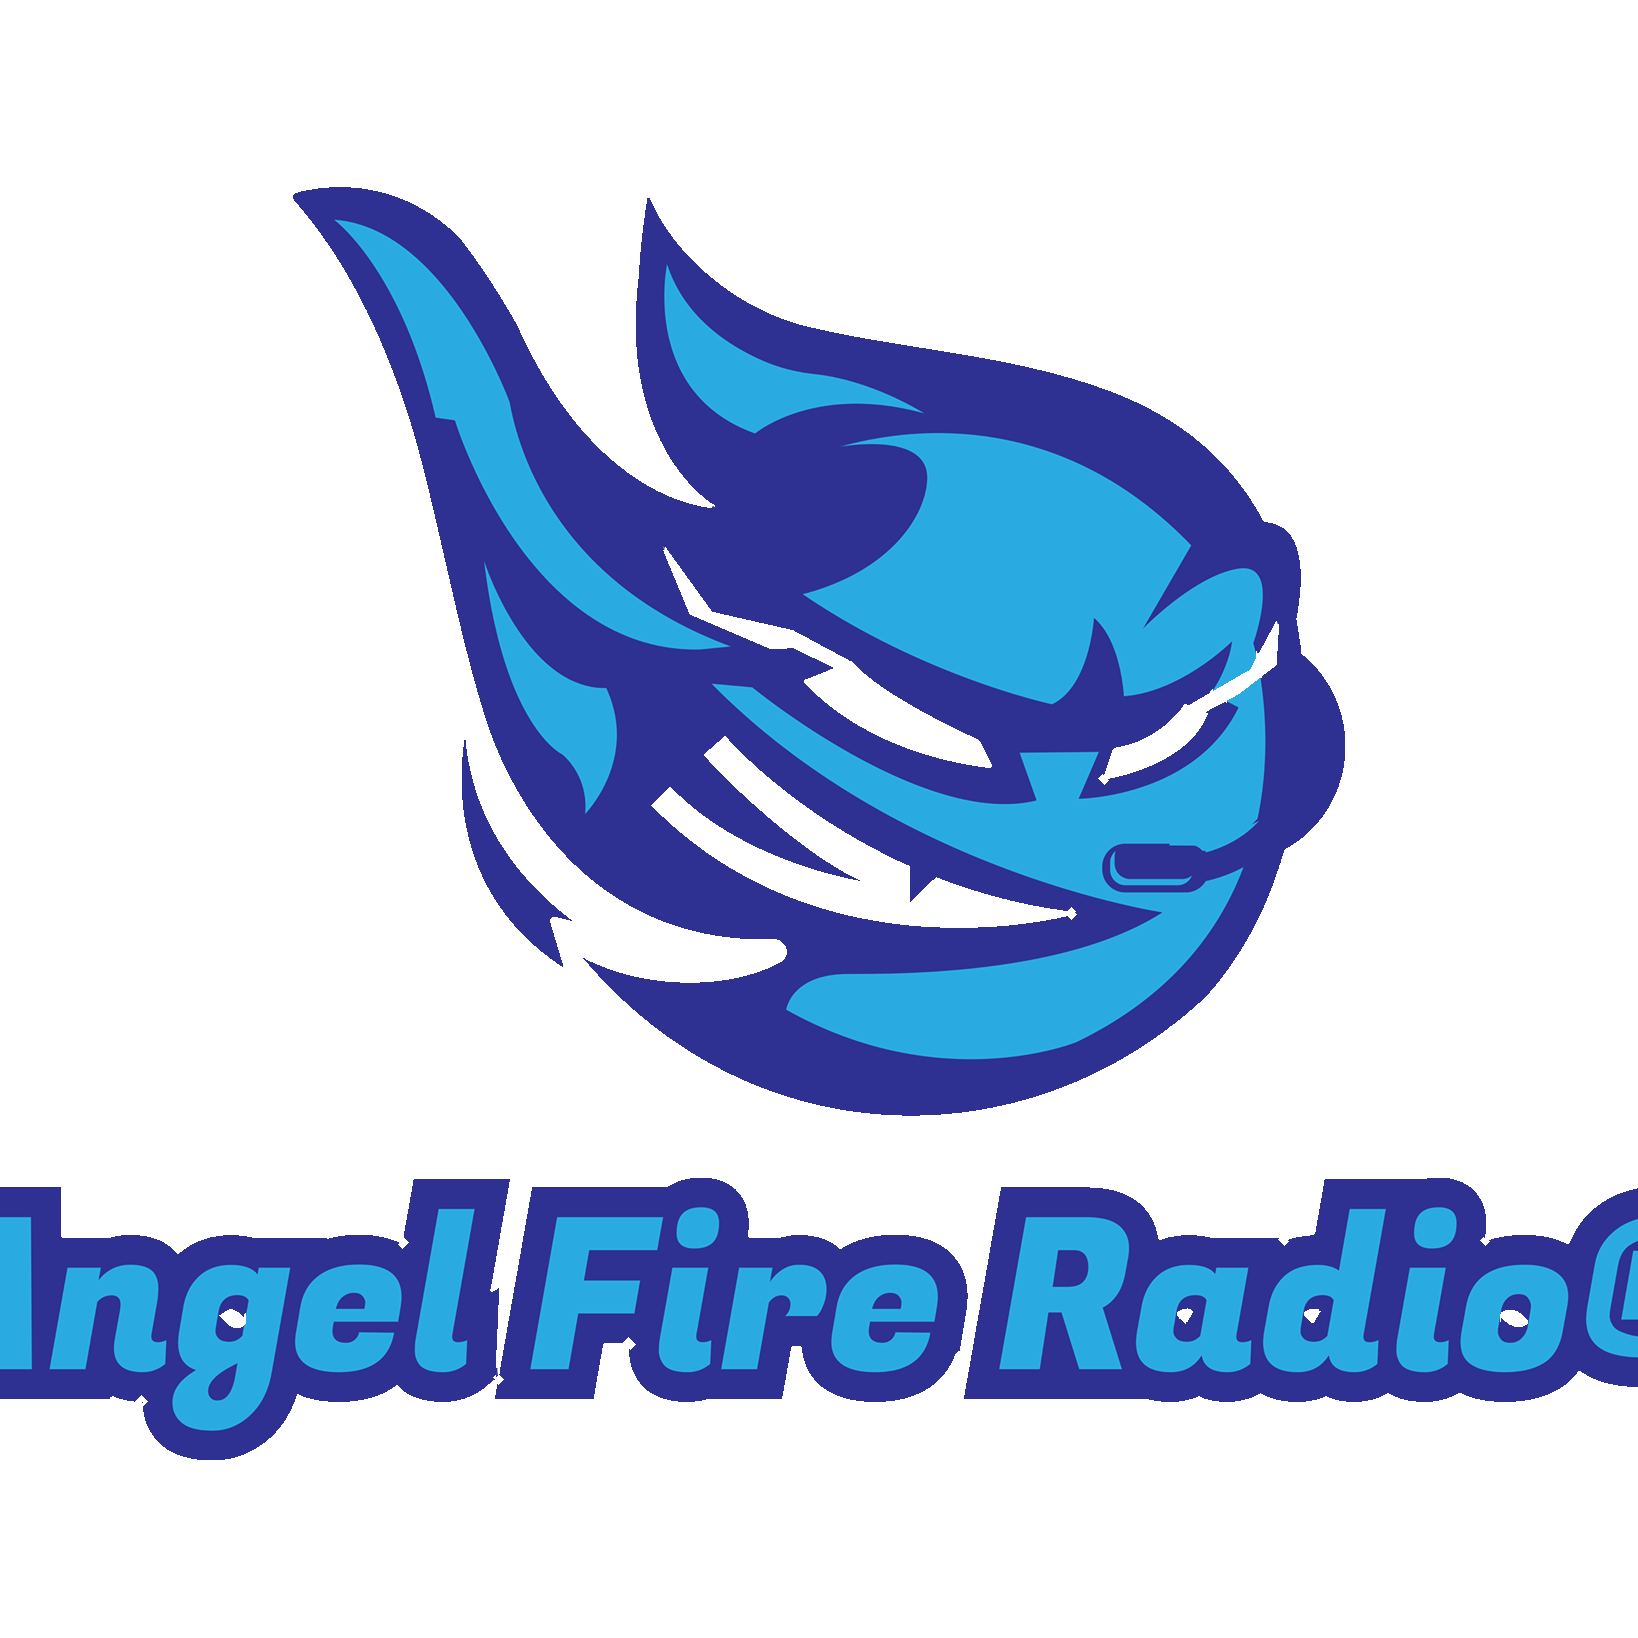 Angel Fire Radio's Angel Fire.FM